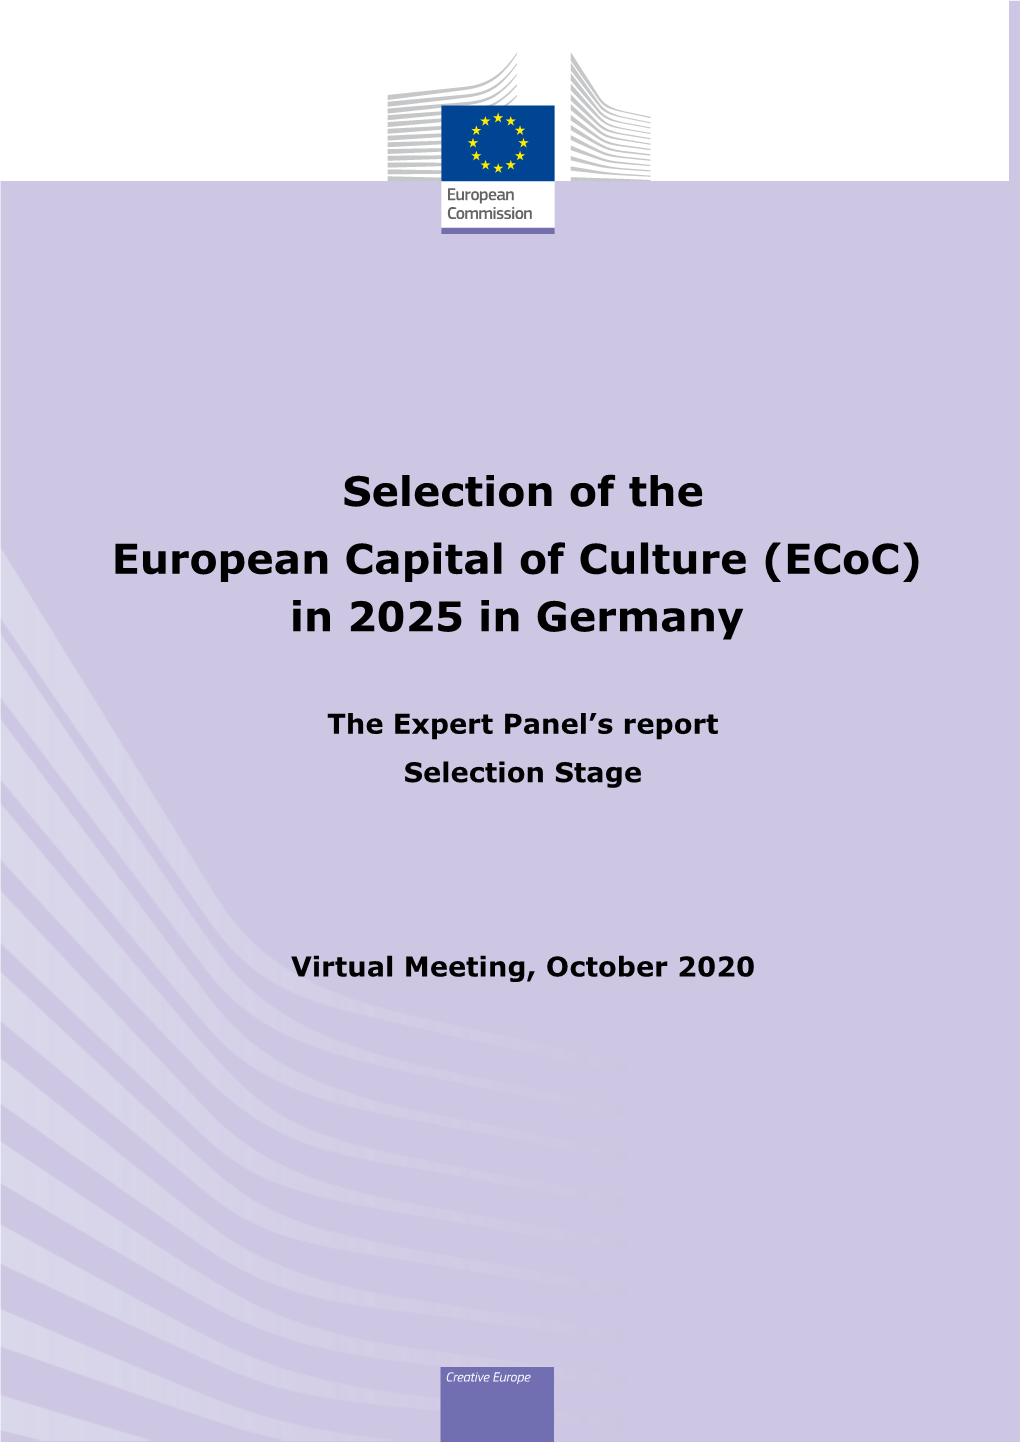 ECOC Germany Selection 2025